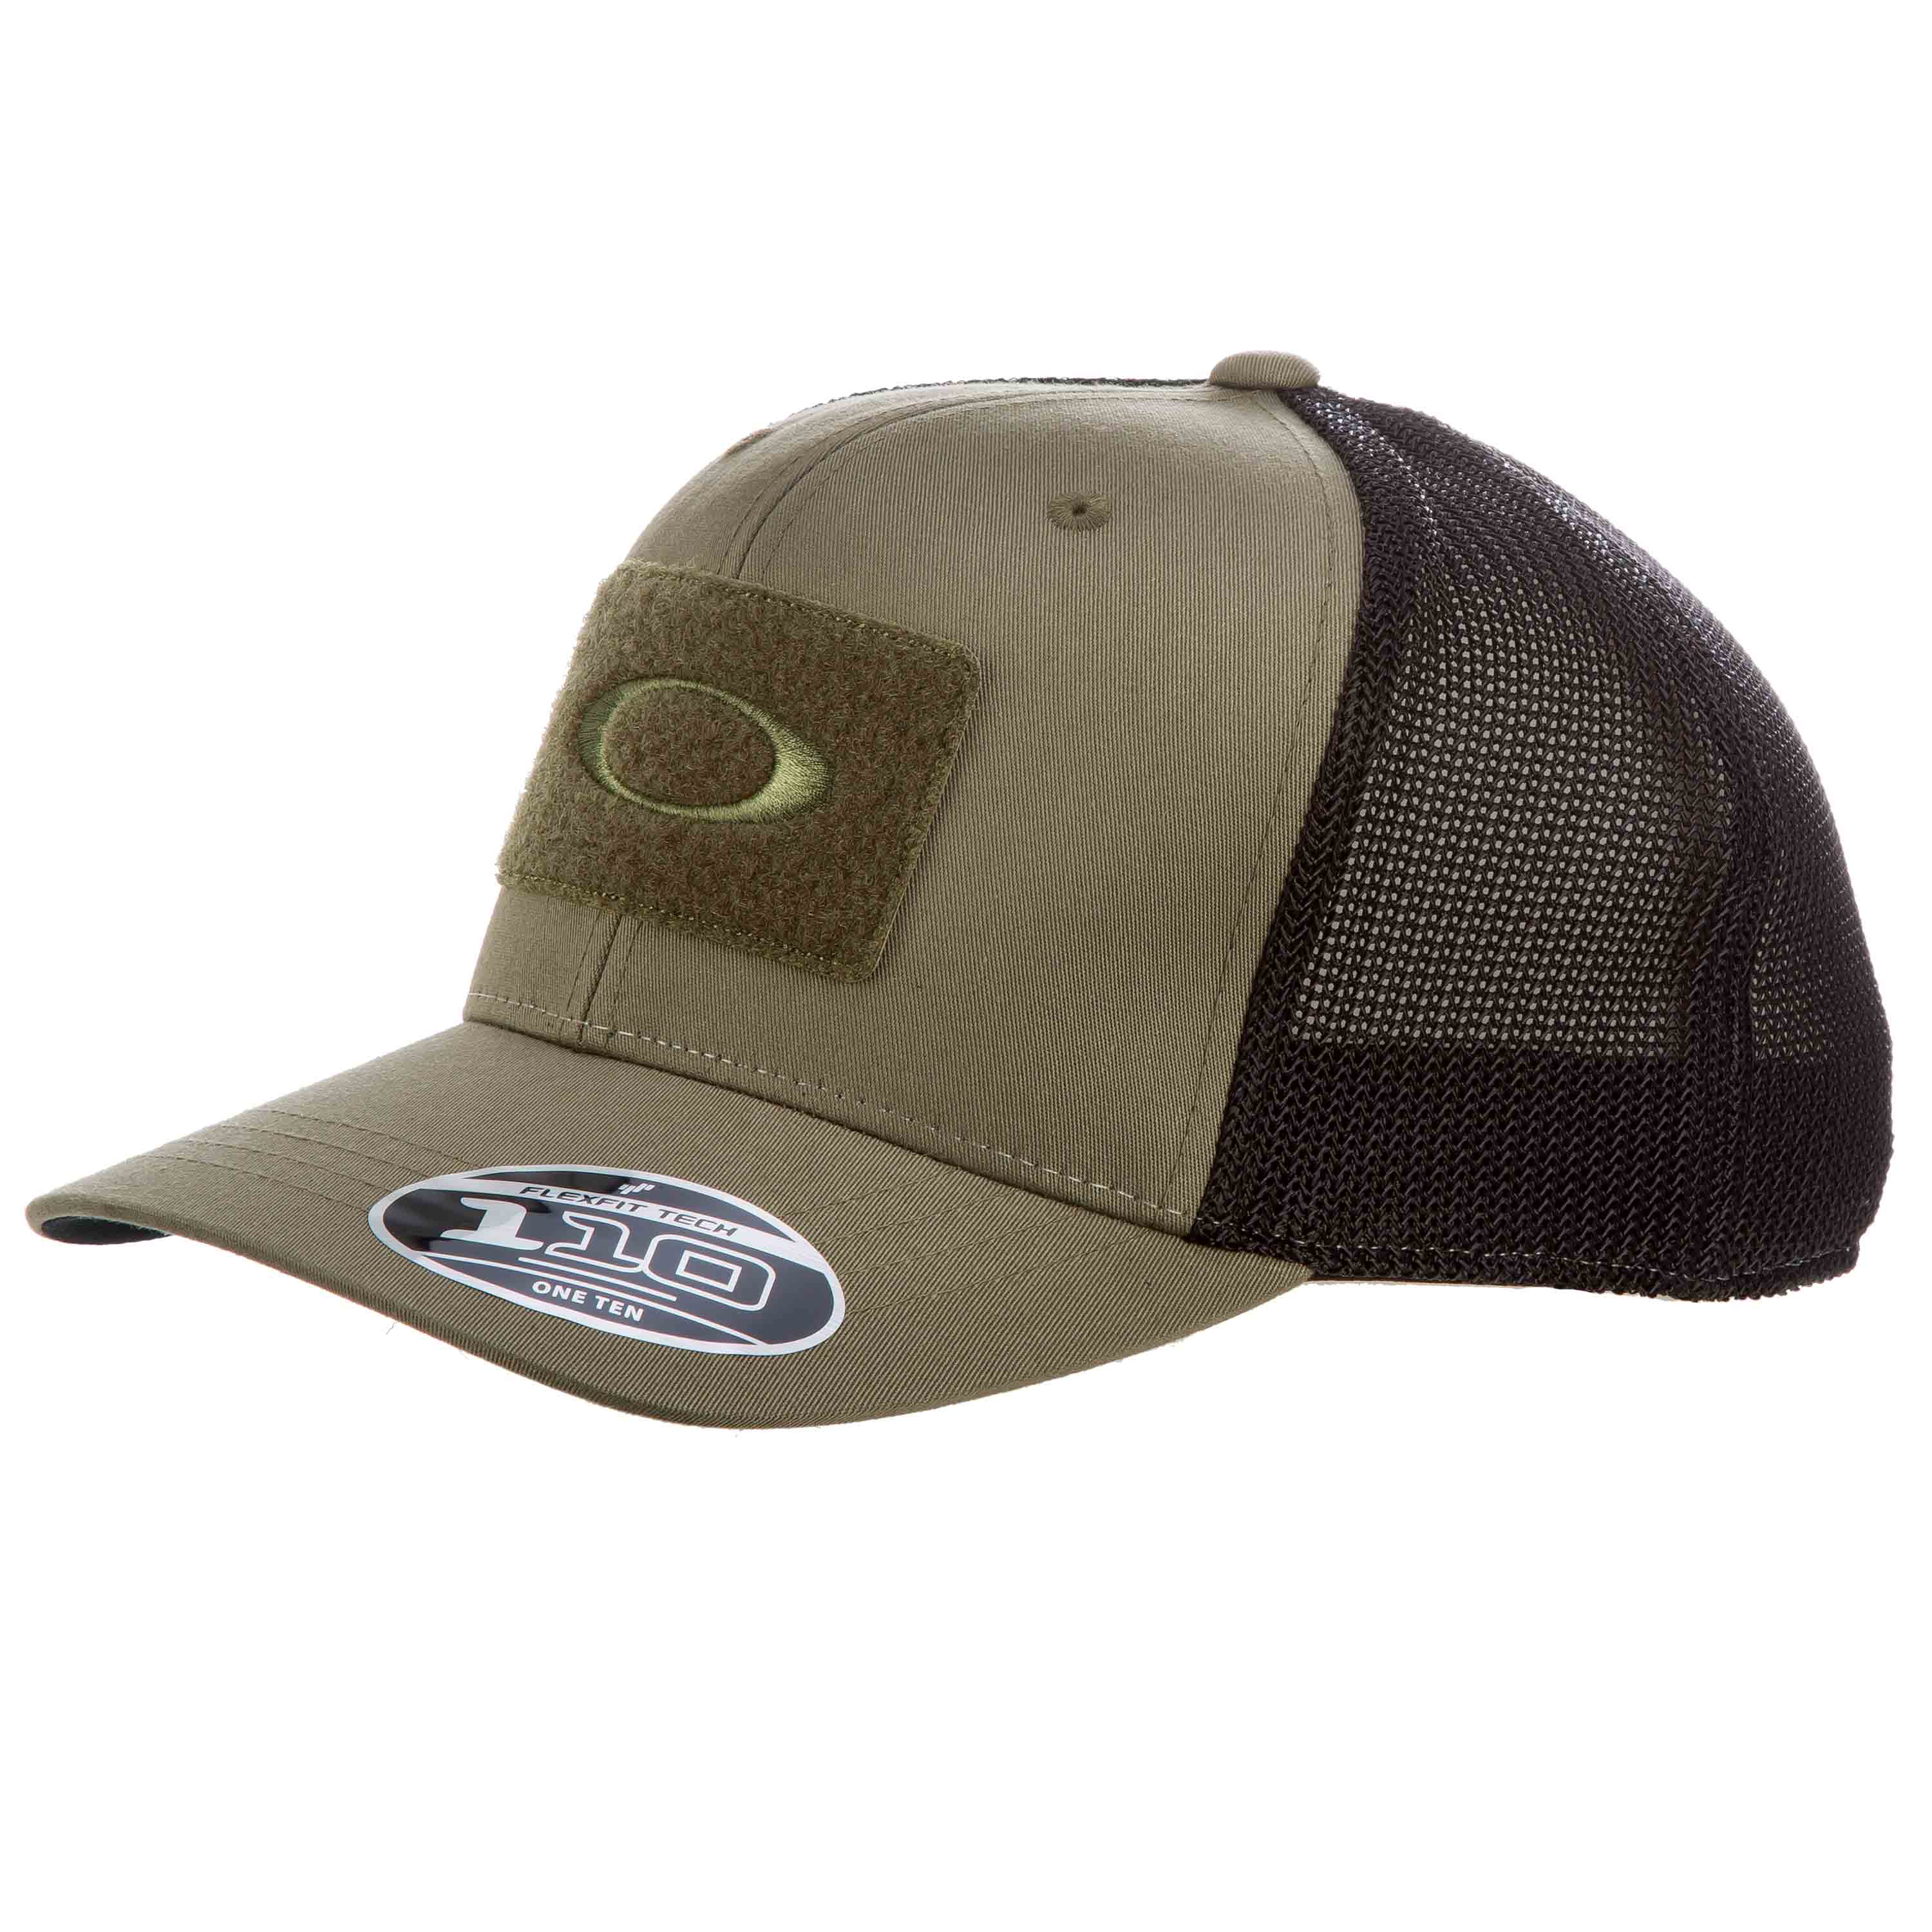 oakley snapback cap